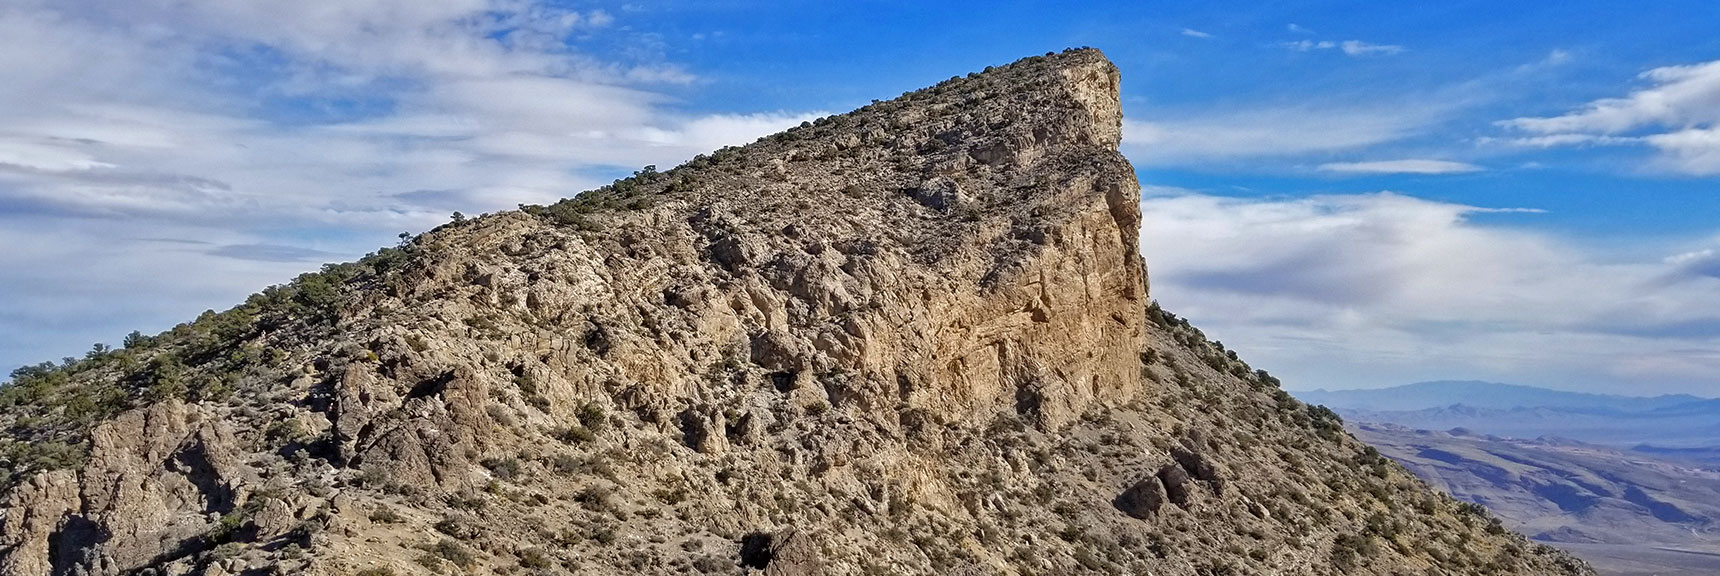 Turtlehead Peak from Turtlehead Peak Saddle in Red Rock Park, Nevada